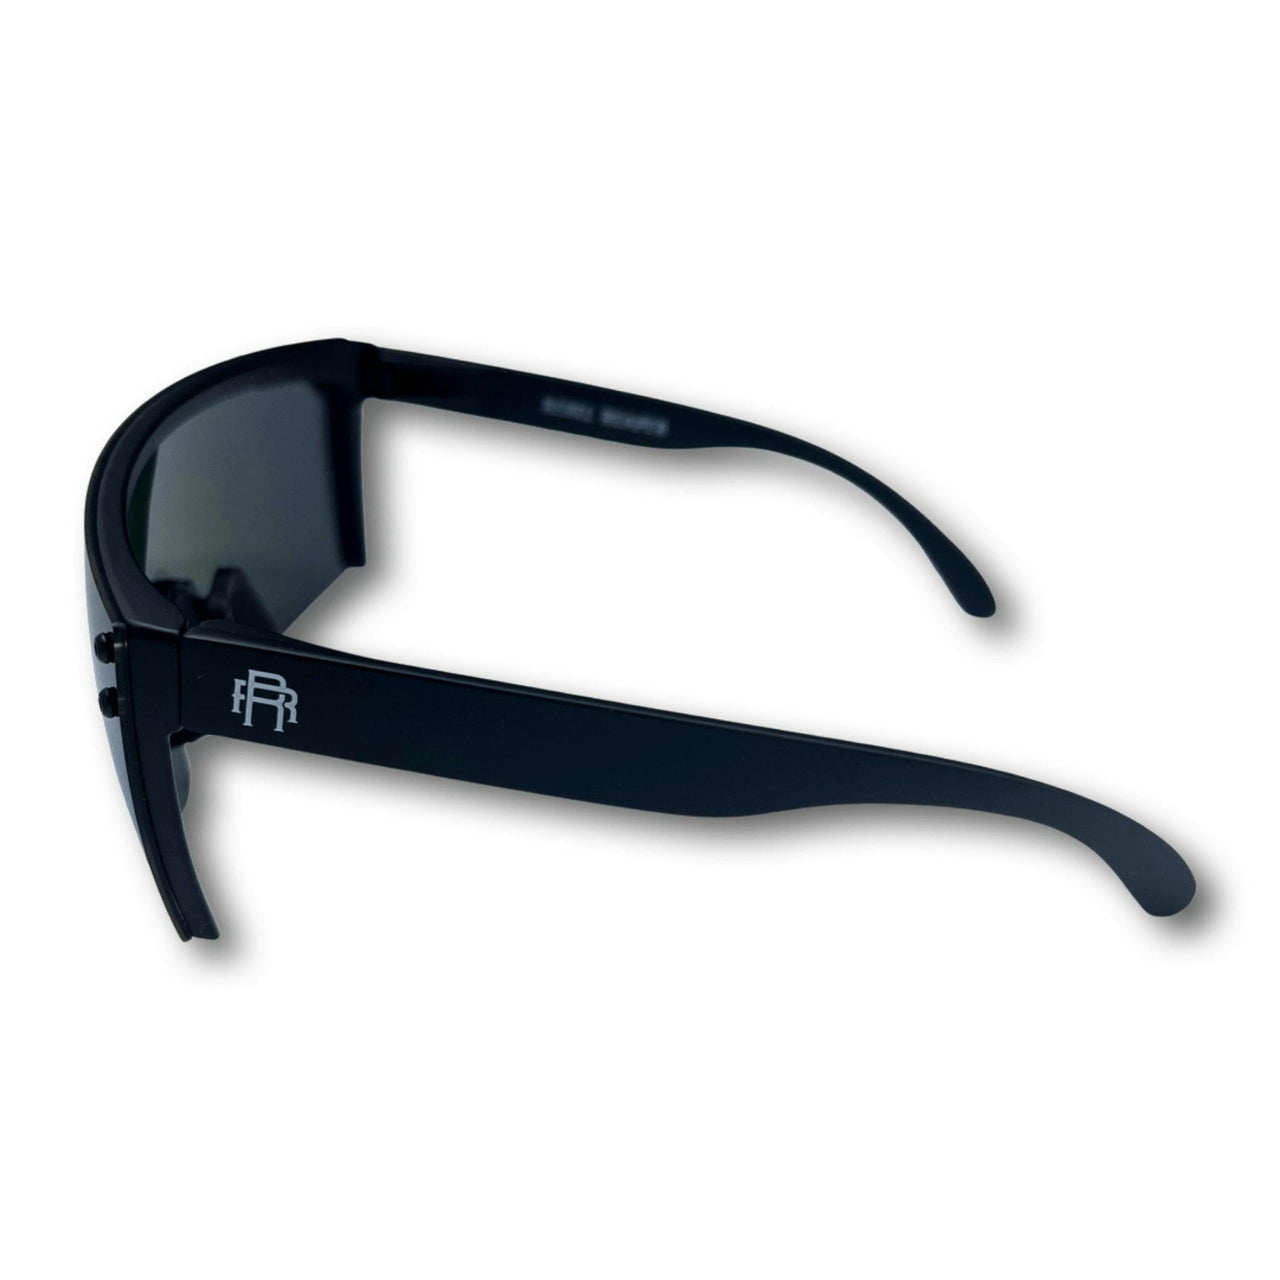 Hogans Black Polarized Lens Sunglasses - Rebel Reaper Clothing CompanySunglasses